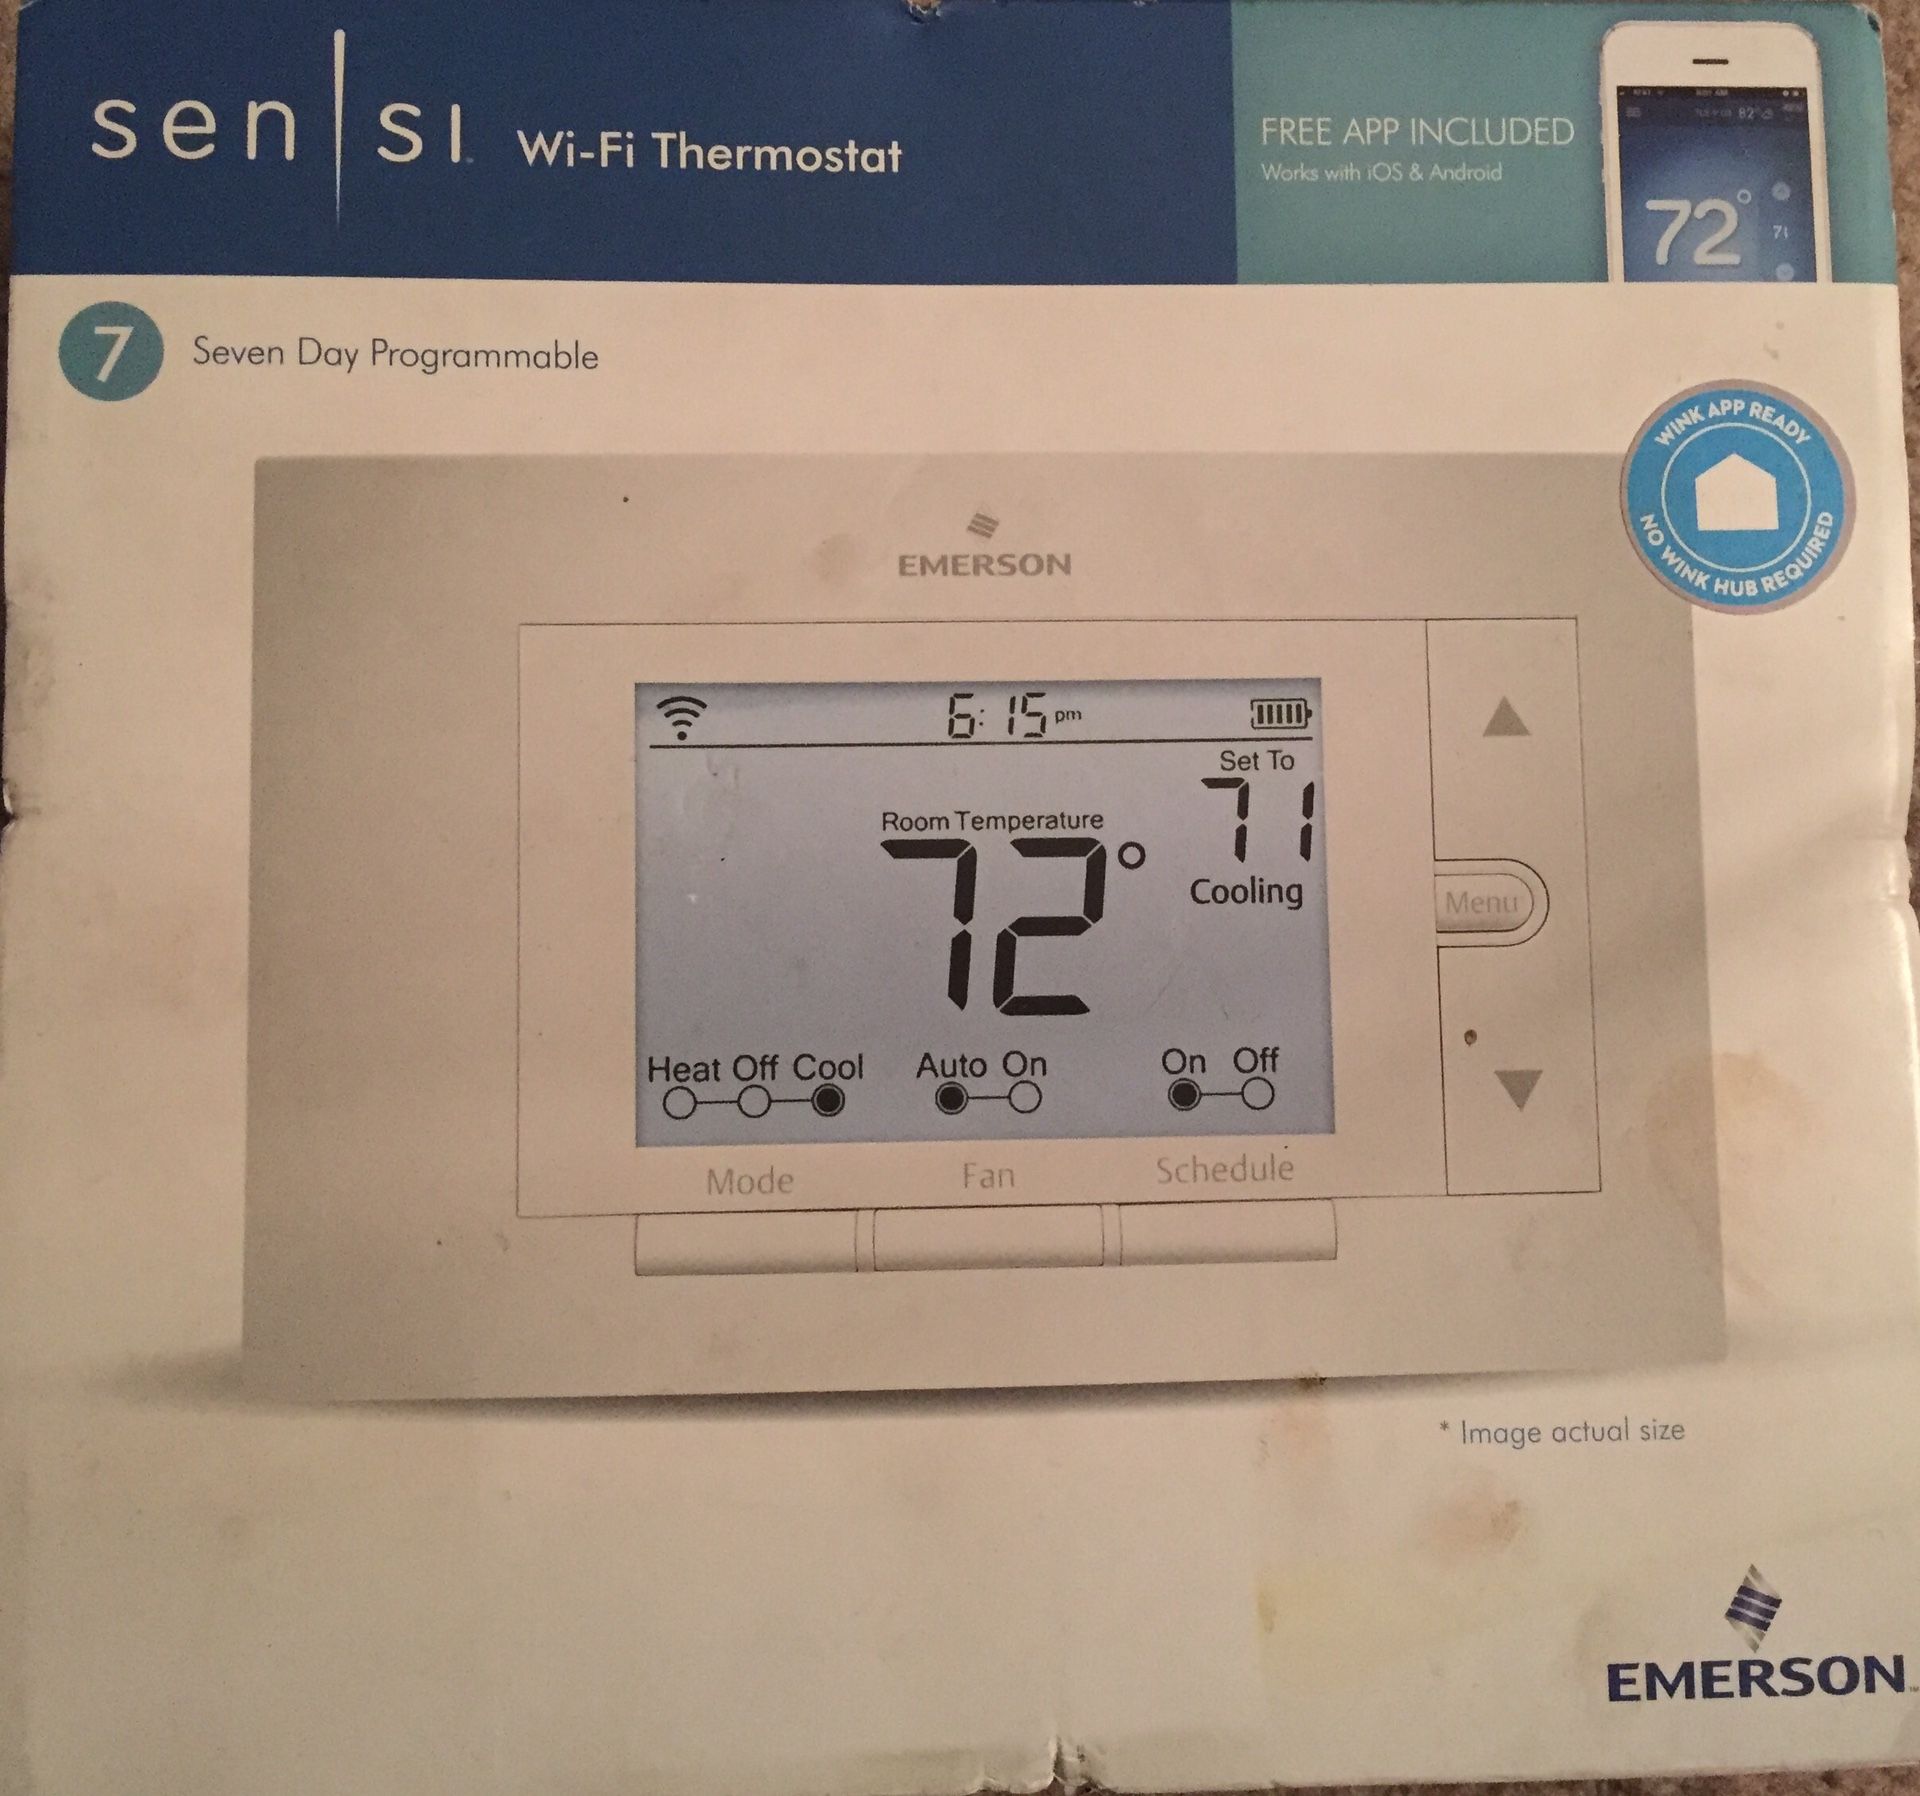 Emerson wi-fi thermostat